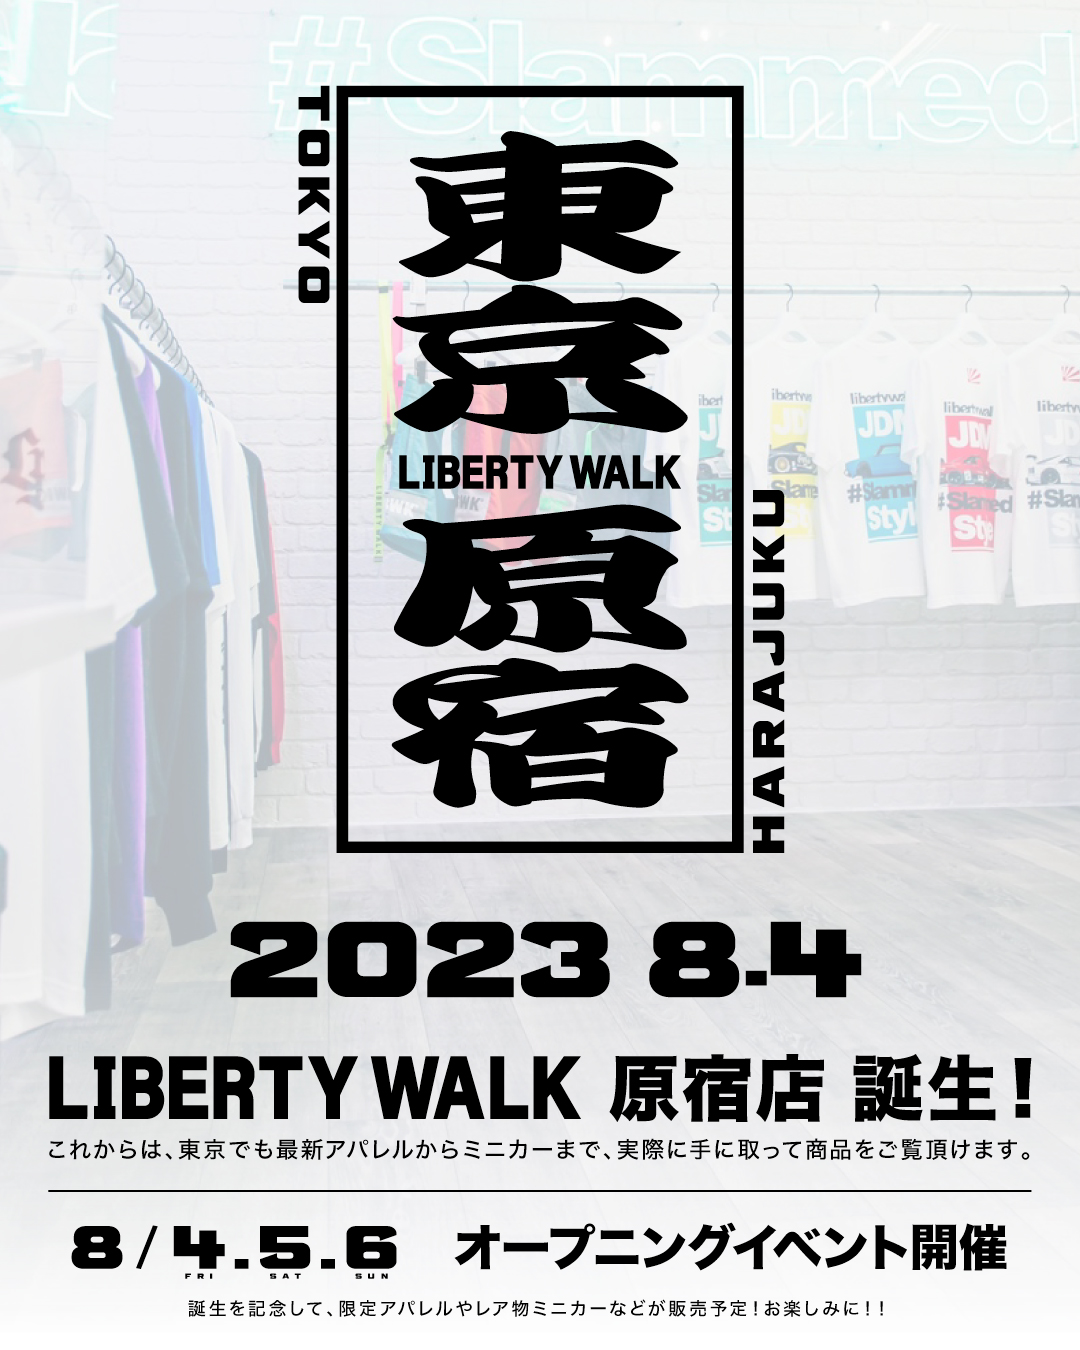 Liberty Walk on X: 